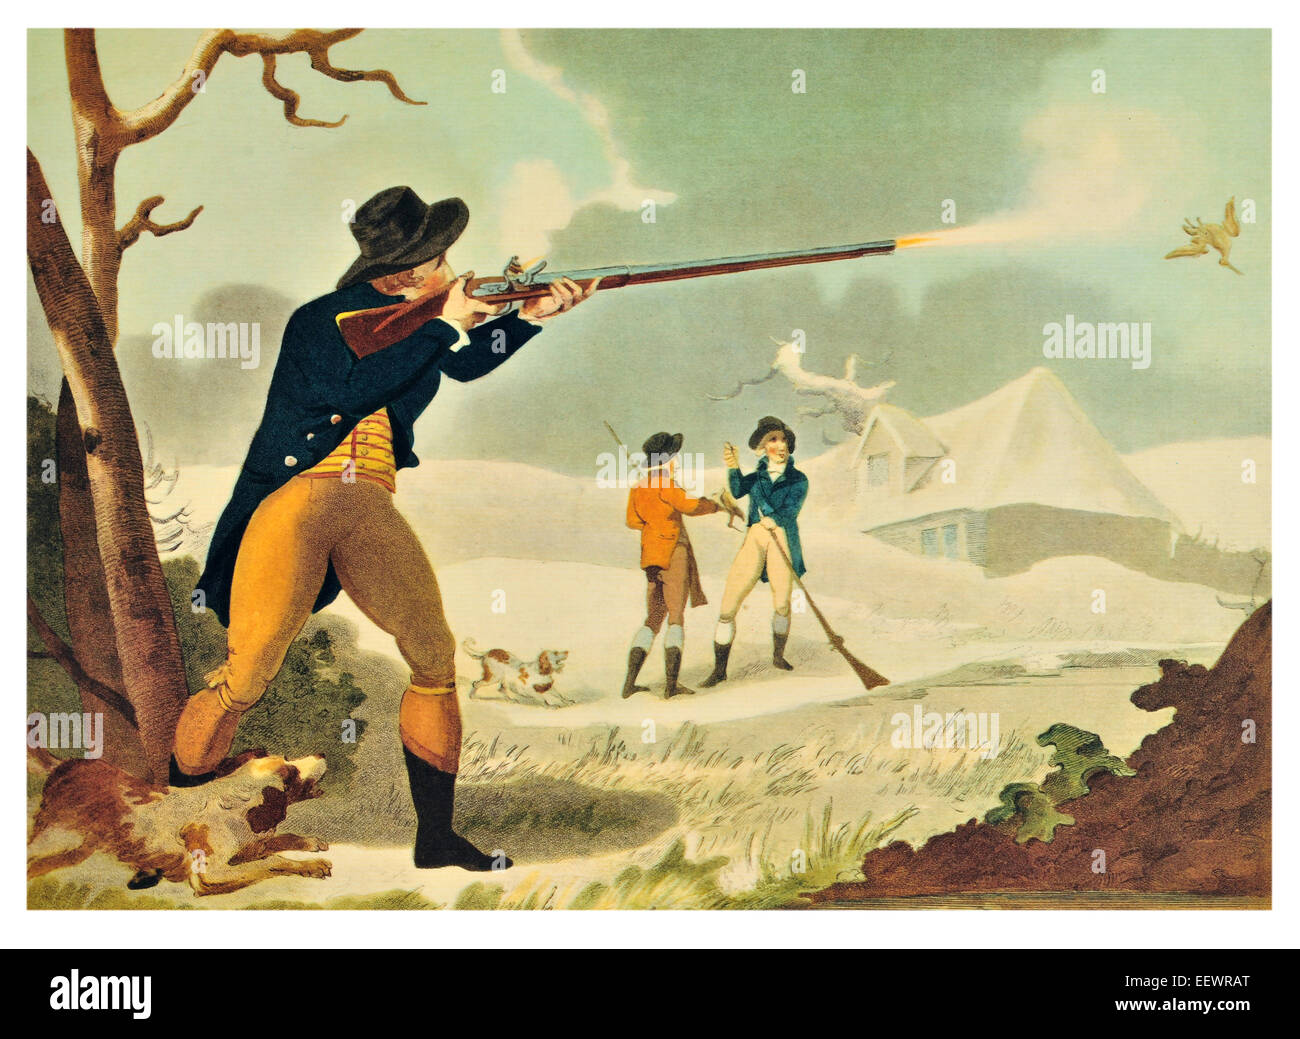 Snipe dispara John Wells fecit 1805 Juego Hunter dispara rifle de caza casa solariega georgiana disfraz aves perro Foto de stock